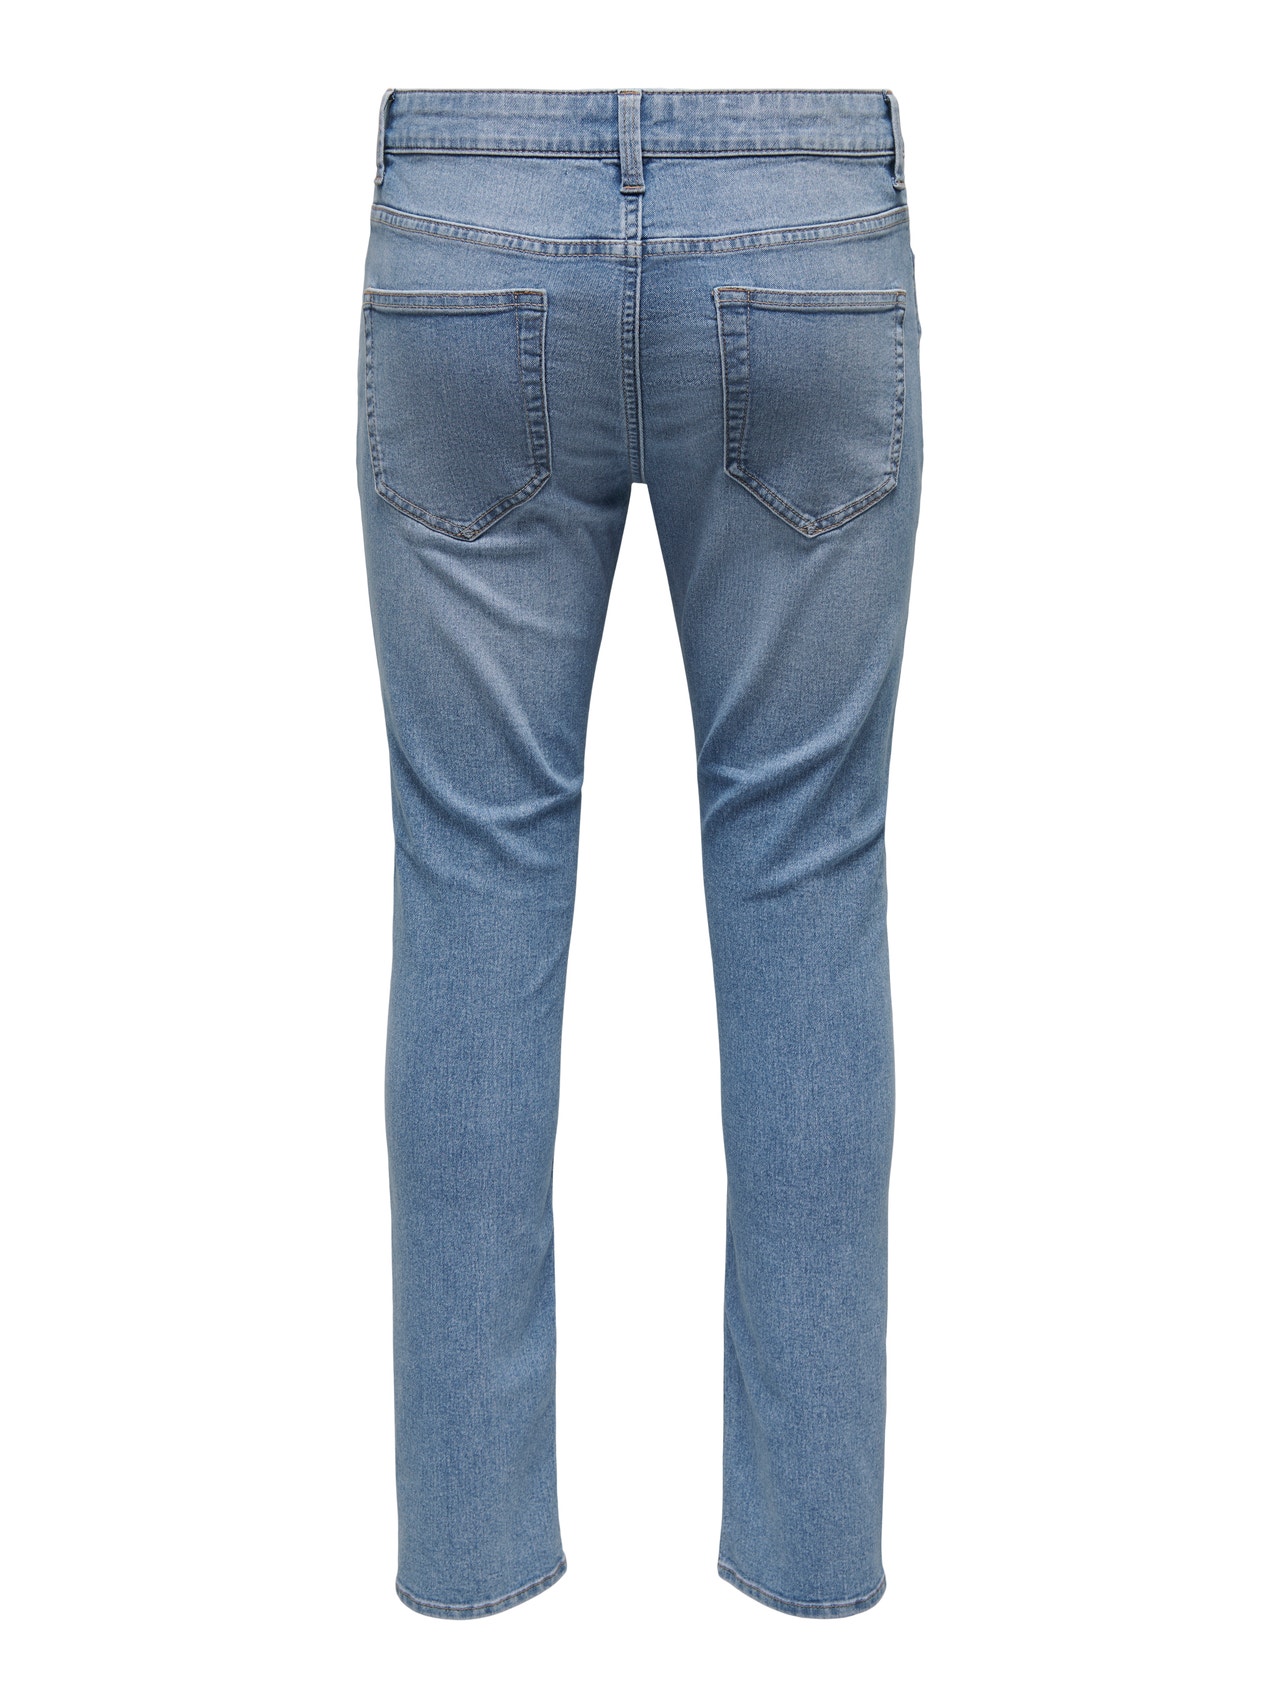 ONLY & SONS ONSLoom Slim Jeans -Light Blue Denim - 22027899